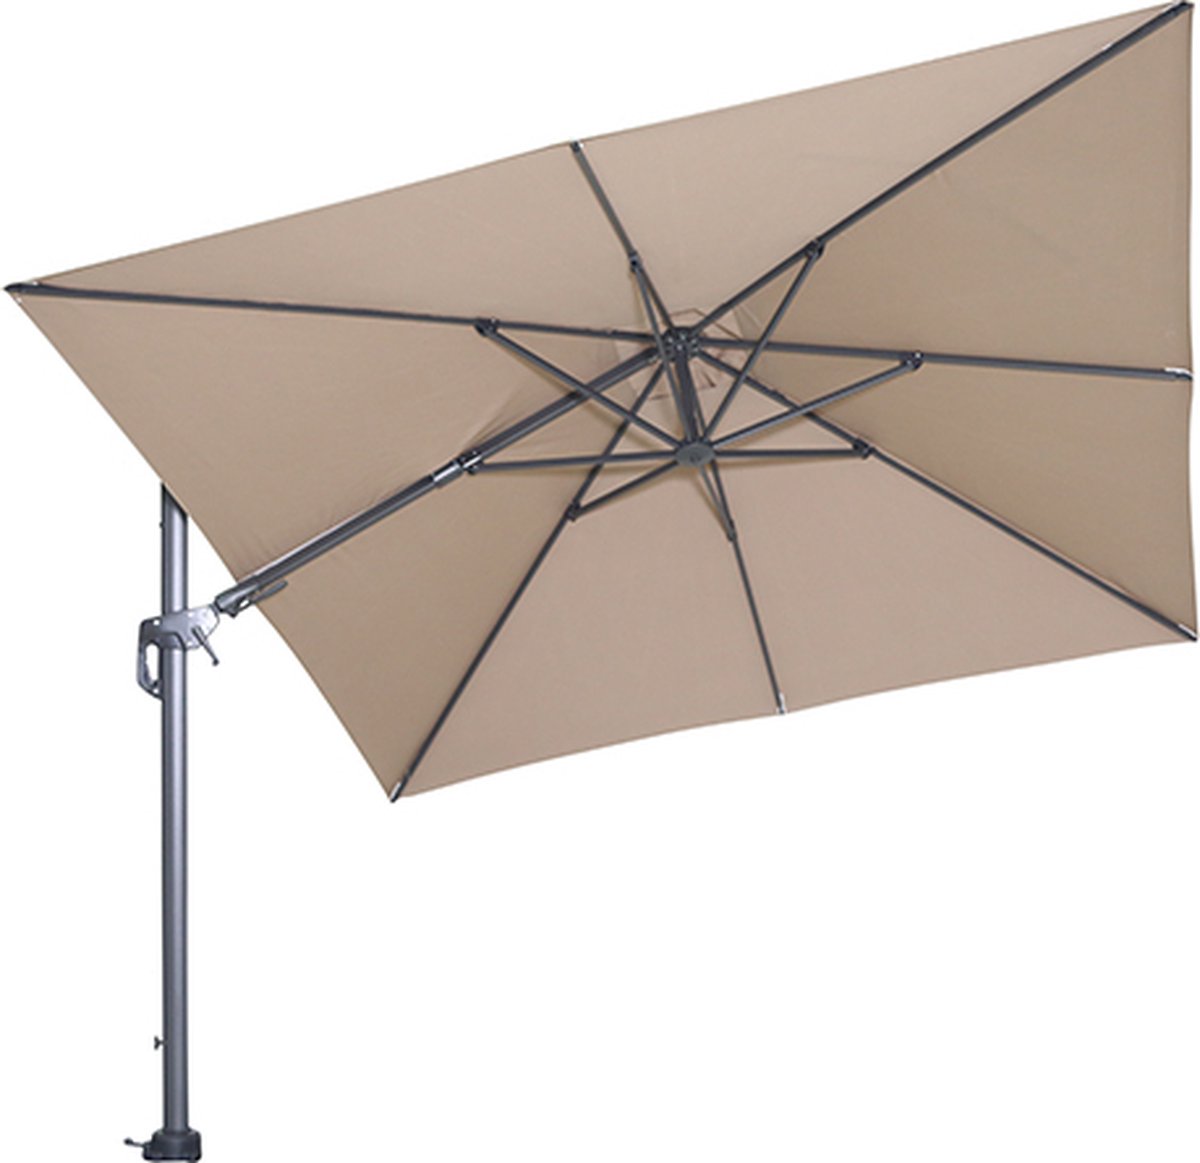 Garden Impressions Hawaii parasol - 3x3 m - taupe doek - inclusief 90 kg parasolvoet en bijpassende parasolhoes